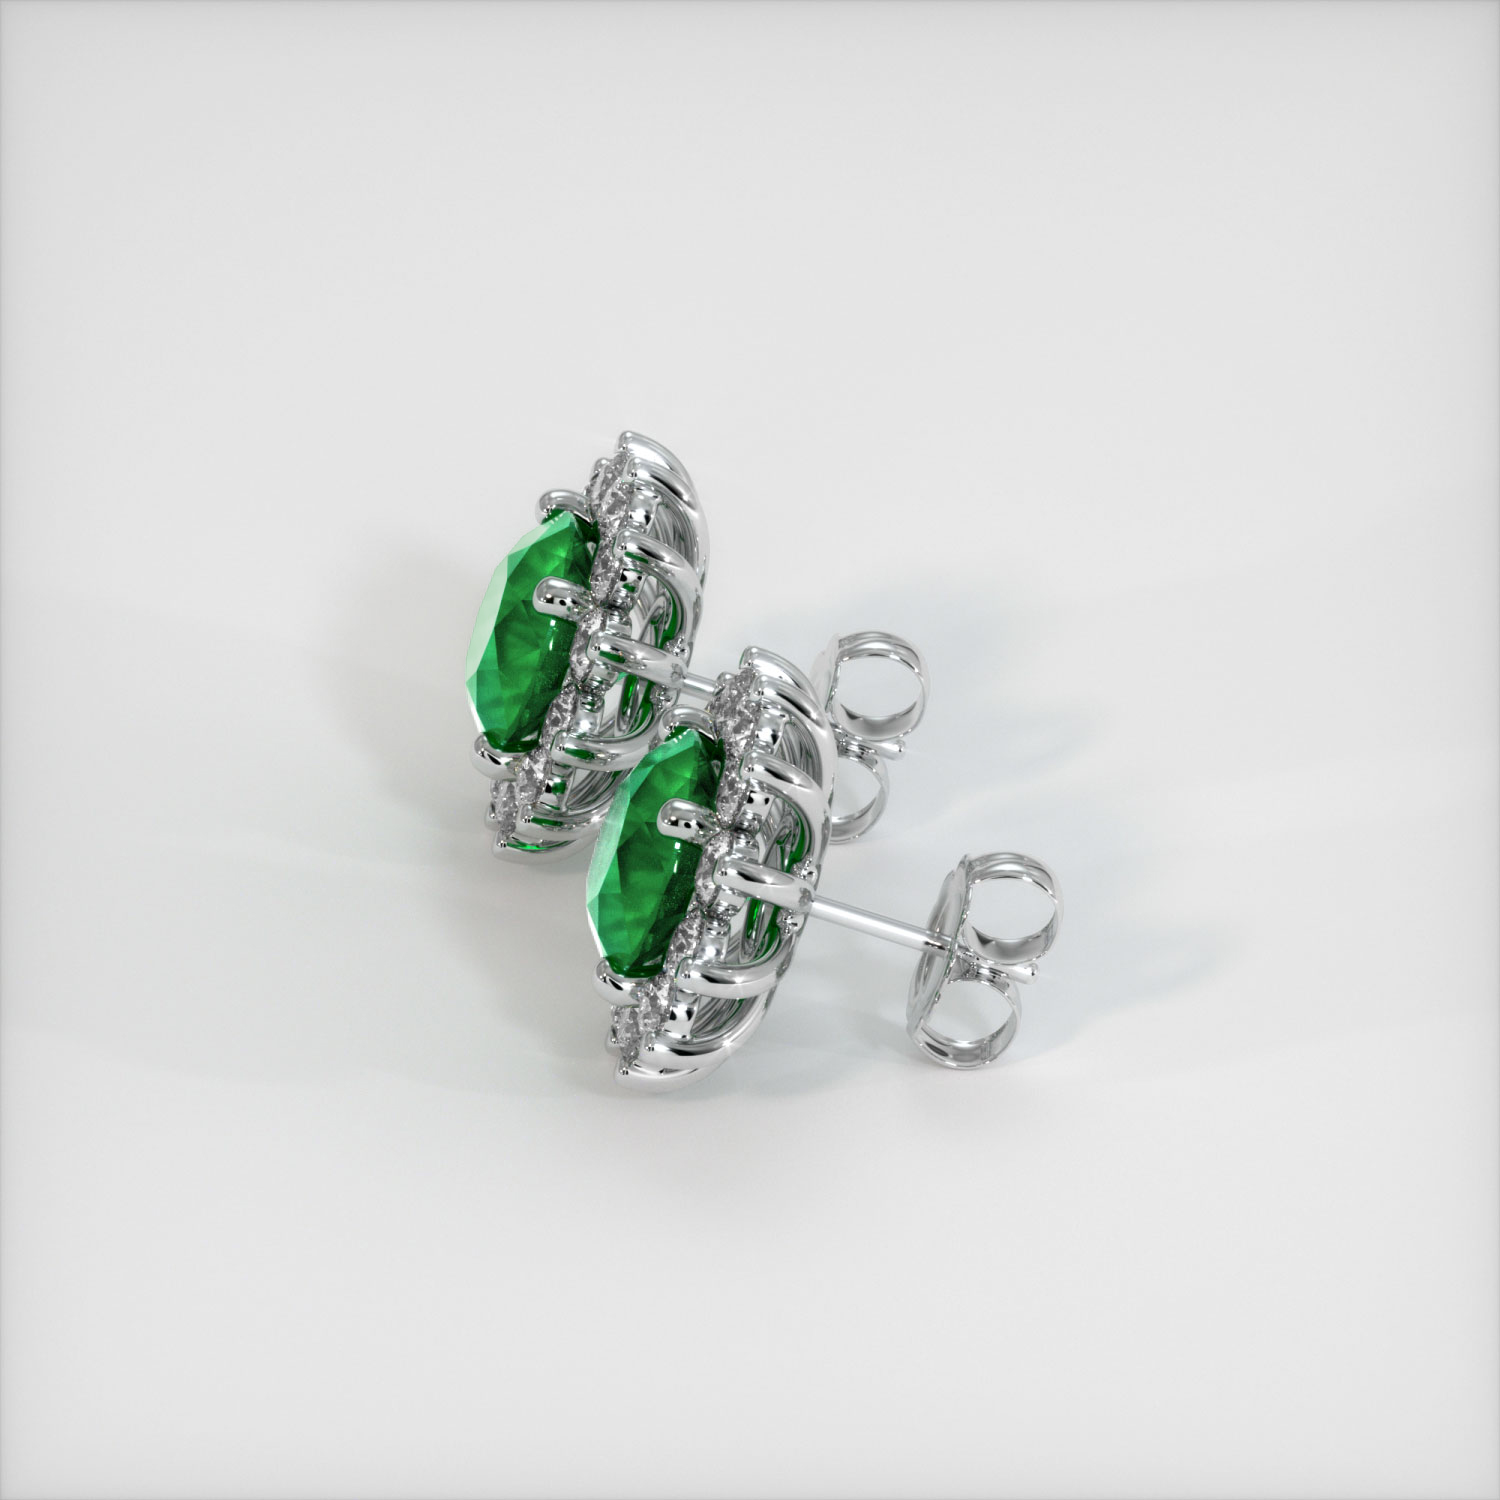 Details about   3.15Ct Emerald Cut D/VVS1 Diamond 14k White Gold Finish Engagement Wedding Ring 